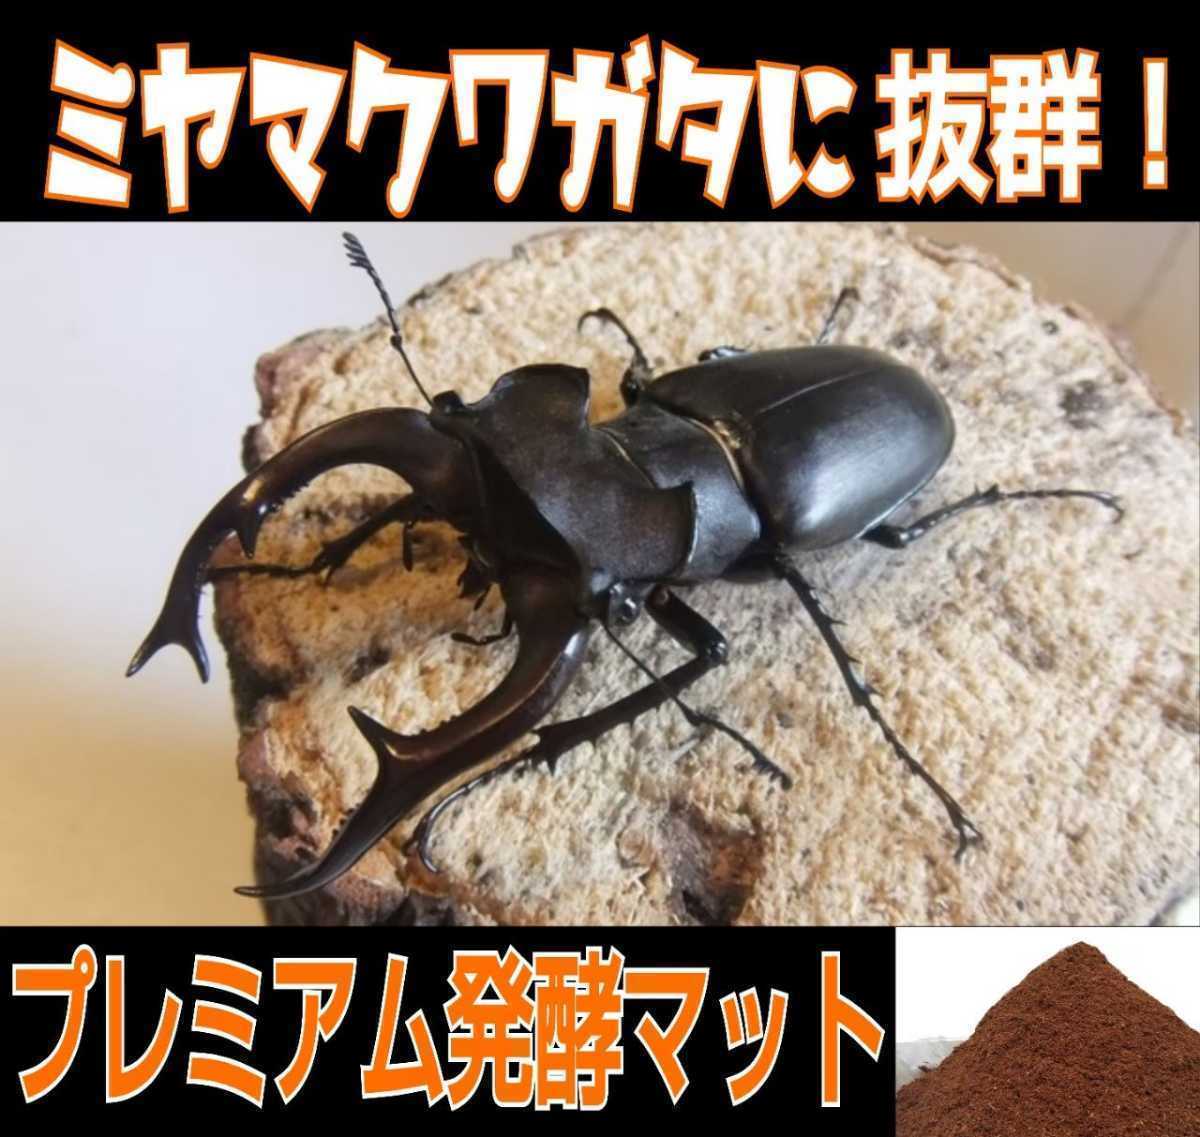  the first .,2.. small amount .. convenience * premium 3 next departure . stag beetle mat entering pudding cup [30 set ]o ok wa, common ta, Miyama,nijiiro, saw .